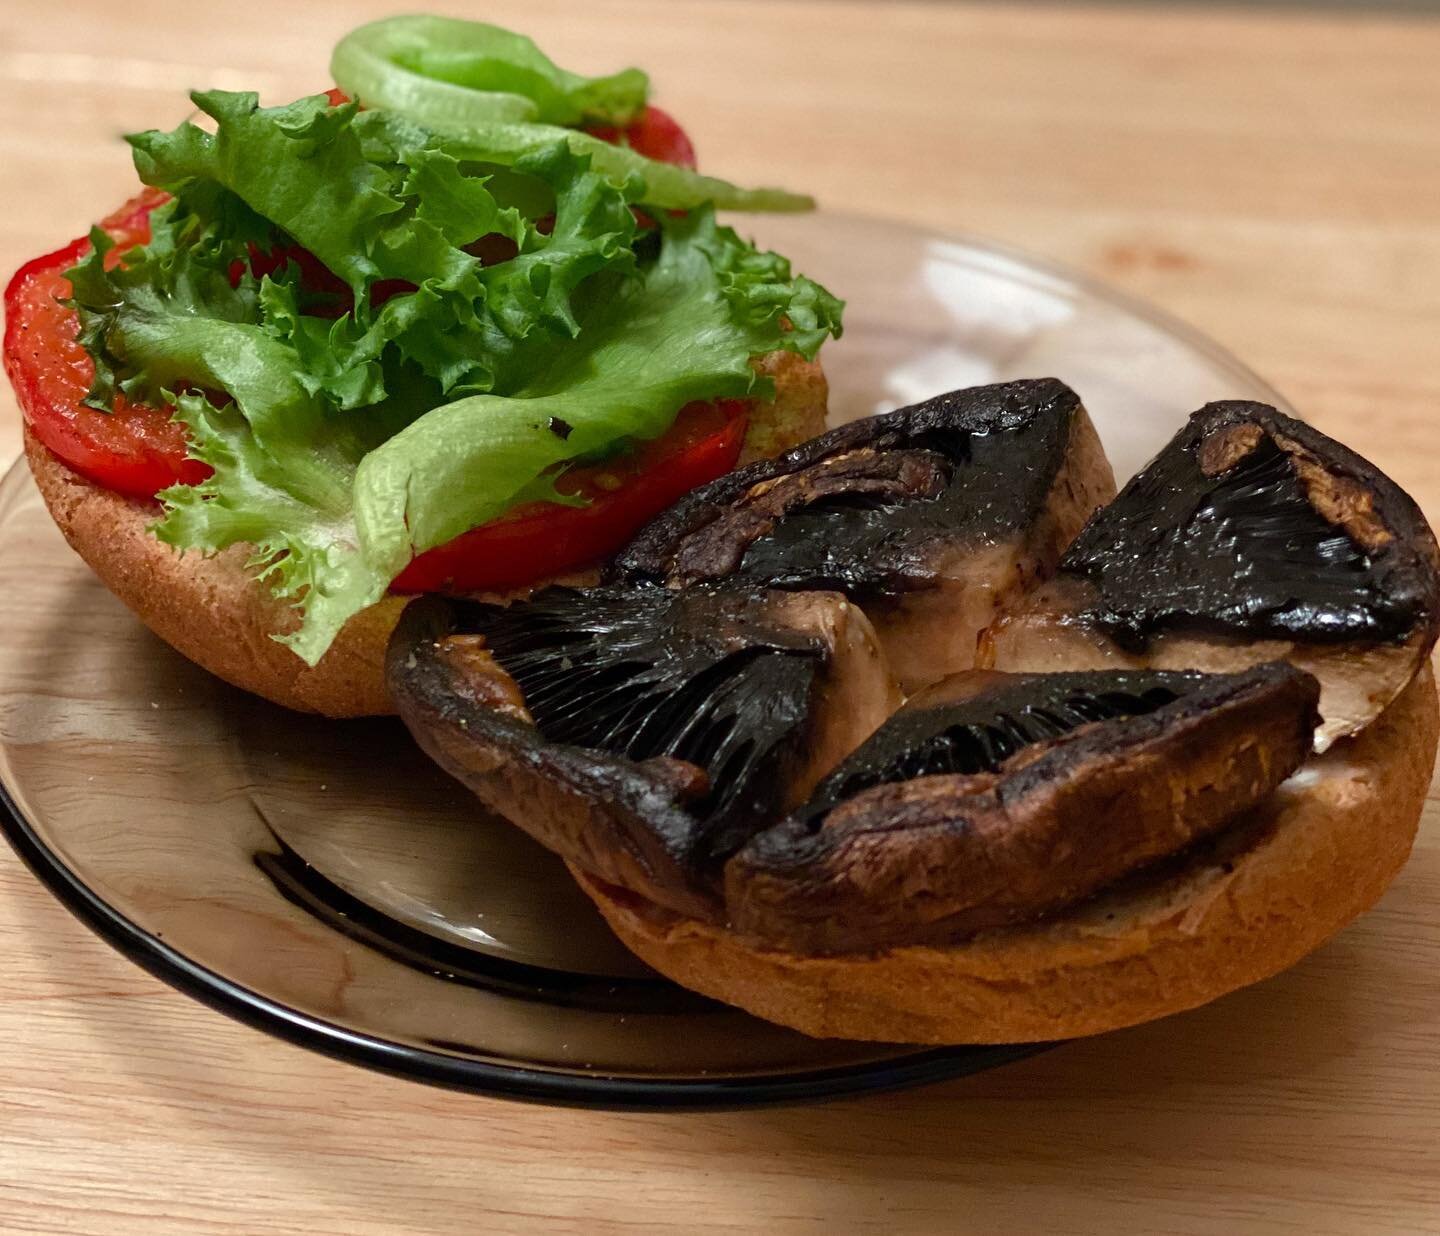 Check out this #vegetarian #bltsandwich using a Kaiser roll, mushroom, tomato, mayo, and our leafy greens! 

#handsfreecultivation #ohiofarm #ohiofarmers #ohiohealth